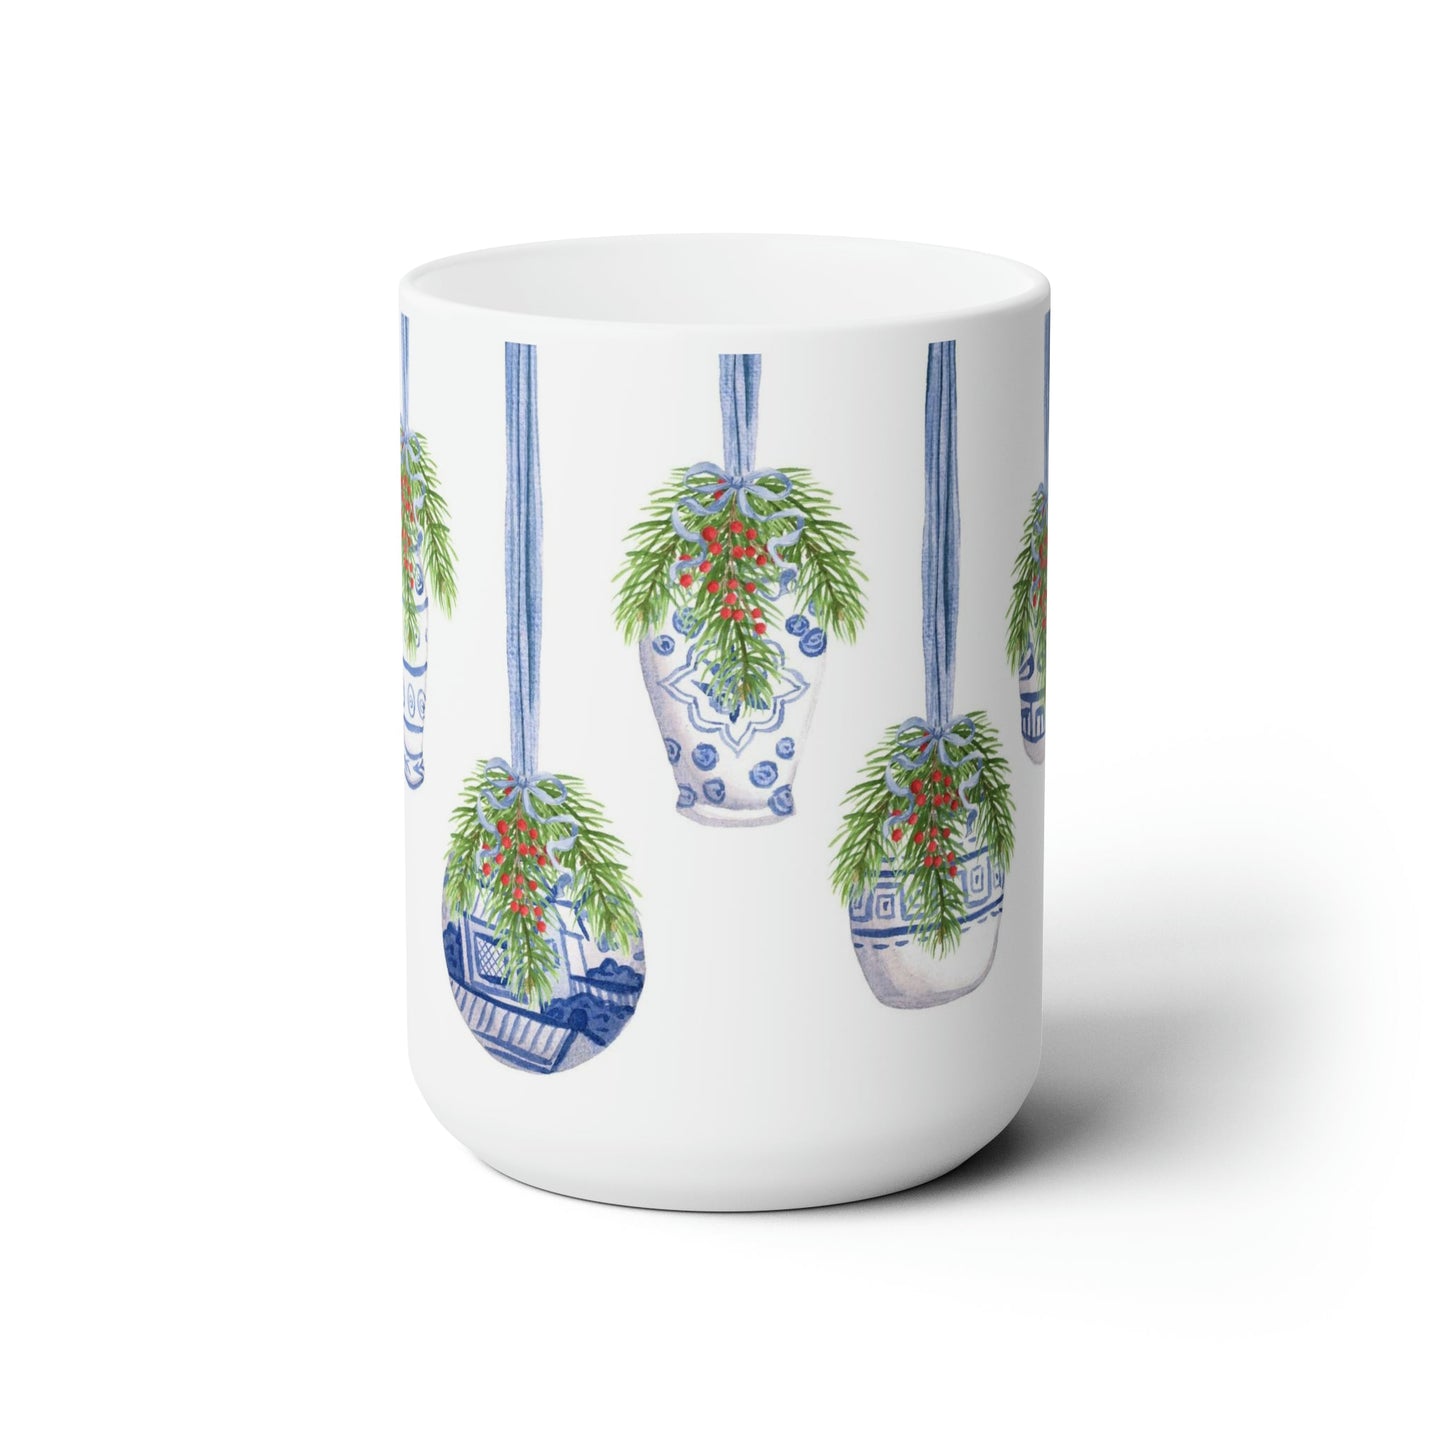 Biltmore Ceramic Christmas Mug